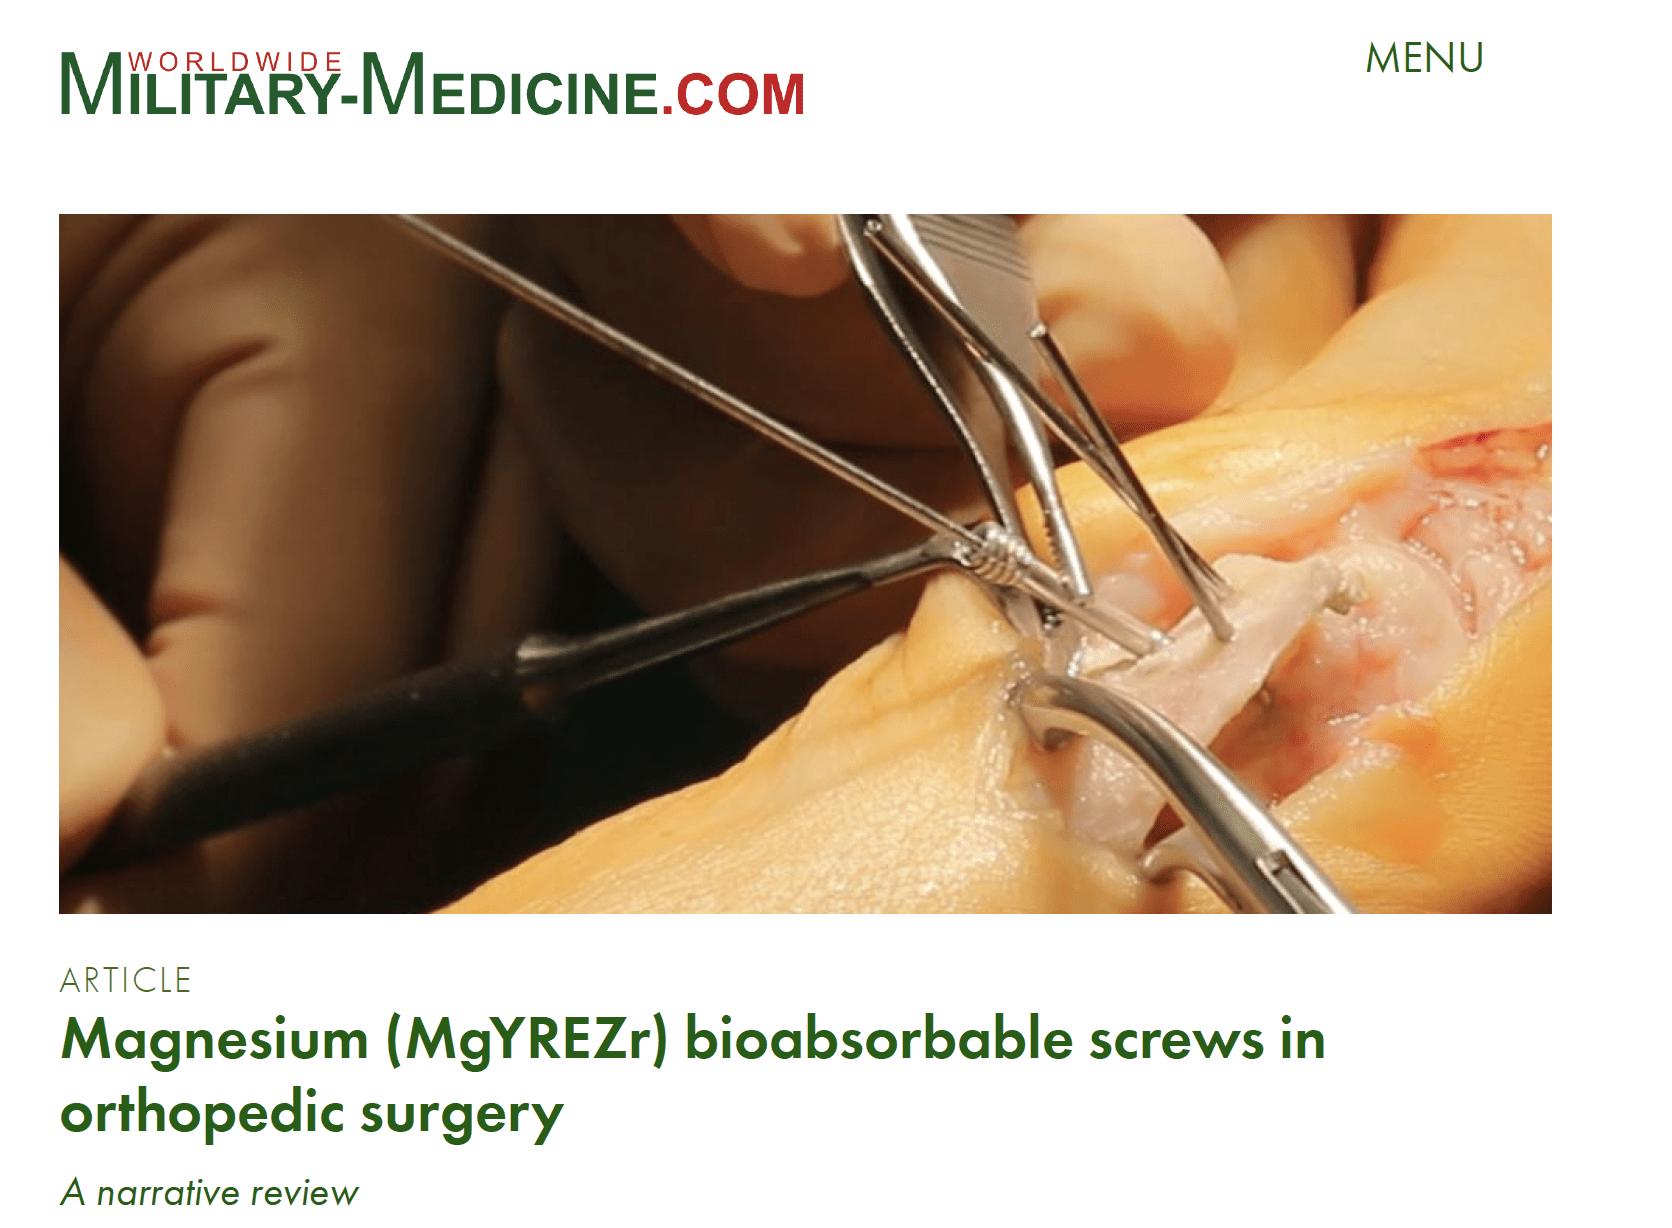 Magnesium bioabsorbable screws in orthopedic surgery